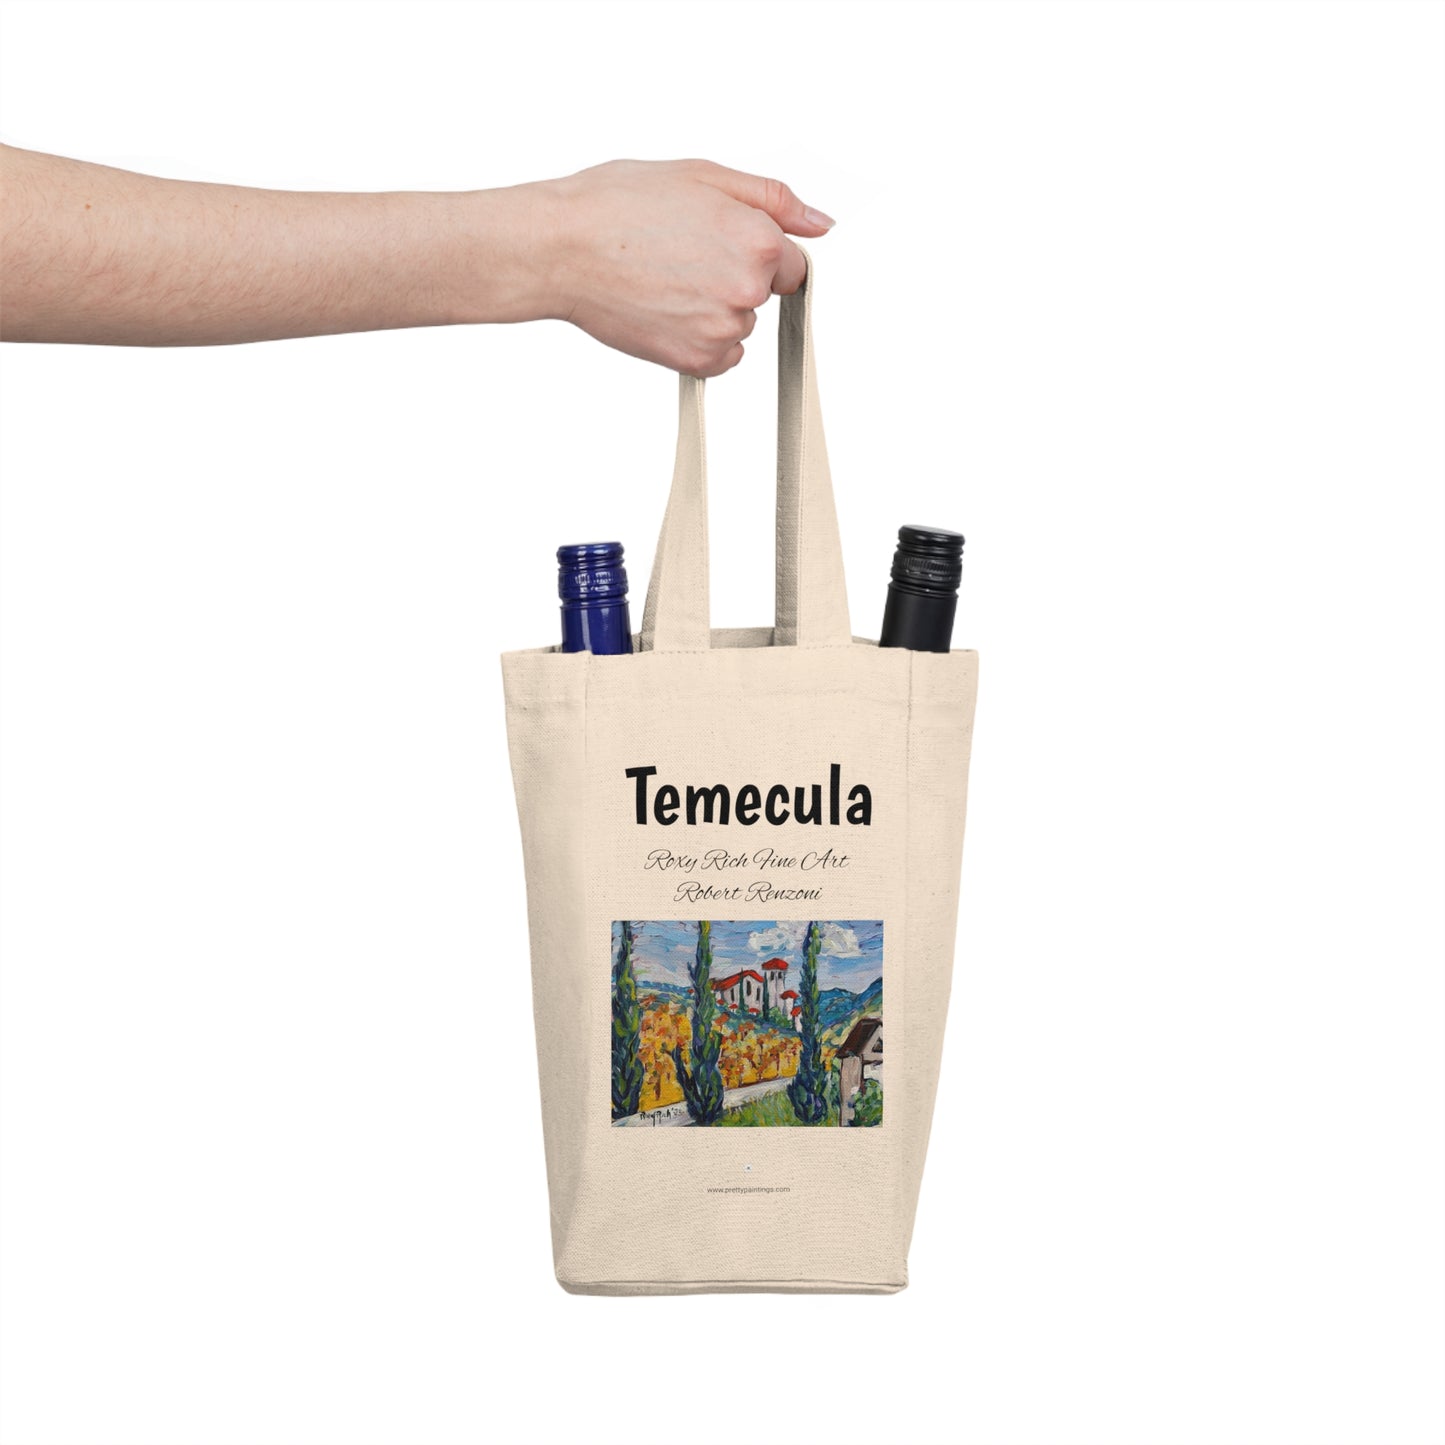 Temecula Double Wine Tote Bag con pintura "Robert Renzoni"